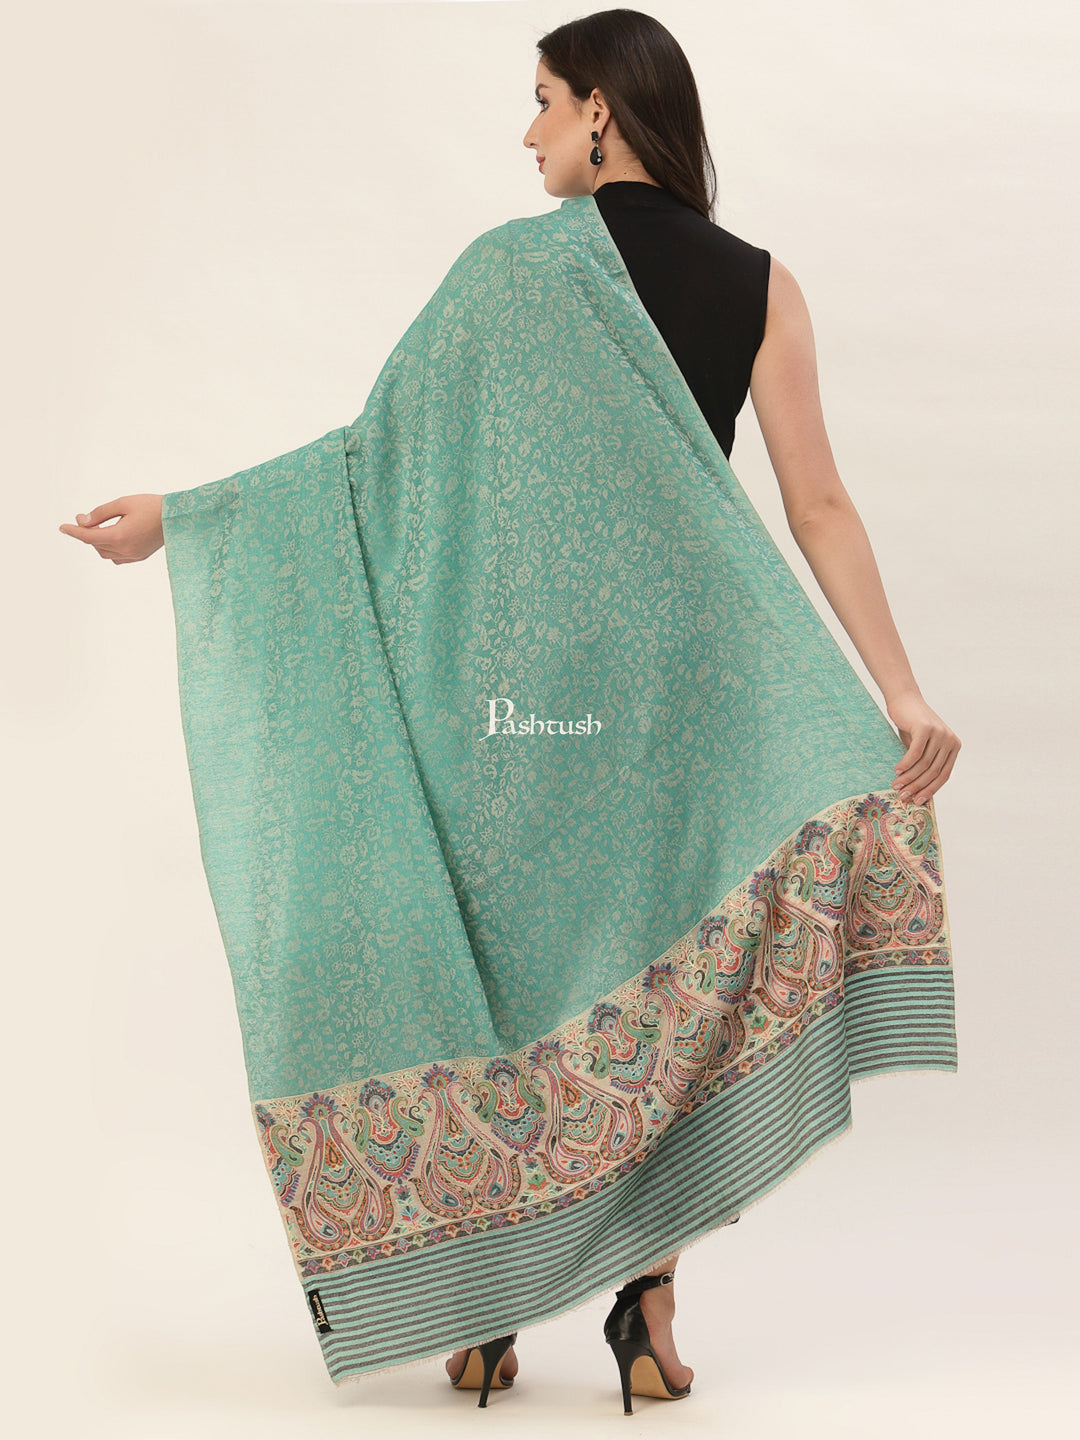 Pashtush India Womens Shawls Pashtush Womens Fine Wool Shawl, With Silky nalki embroidery